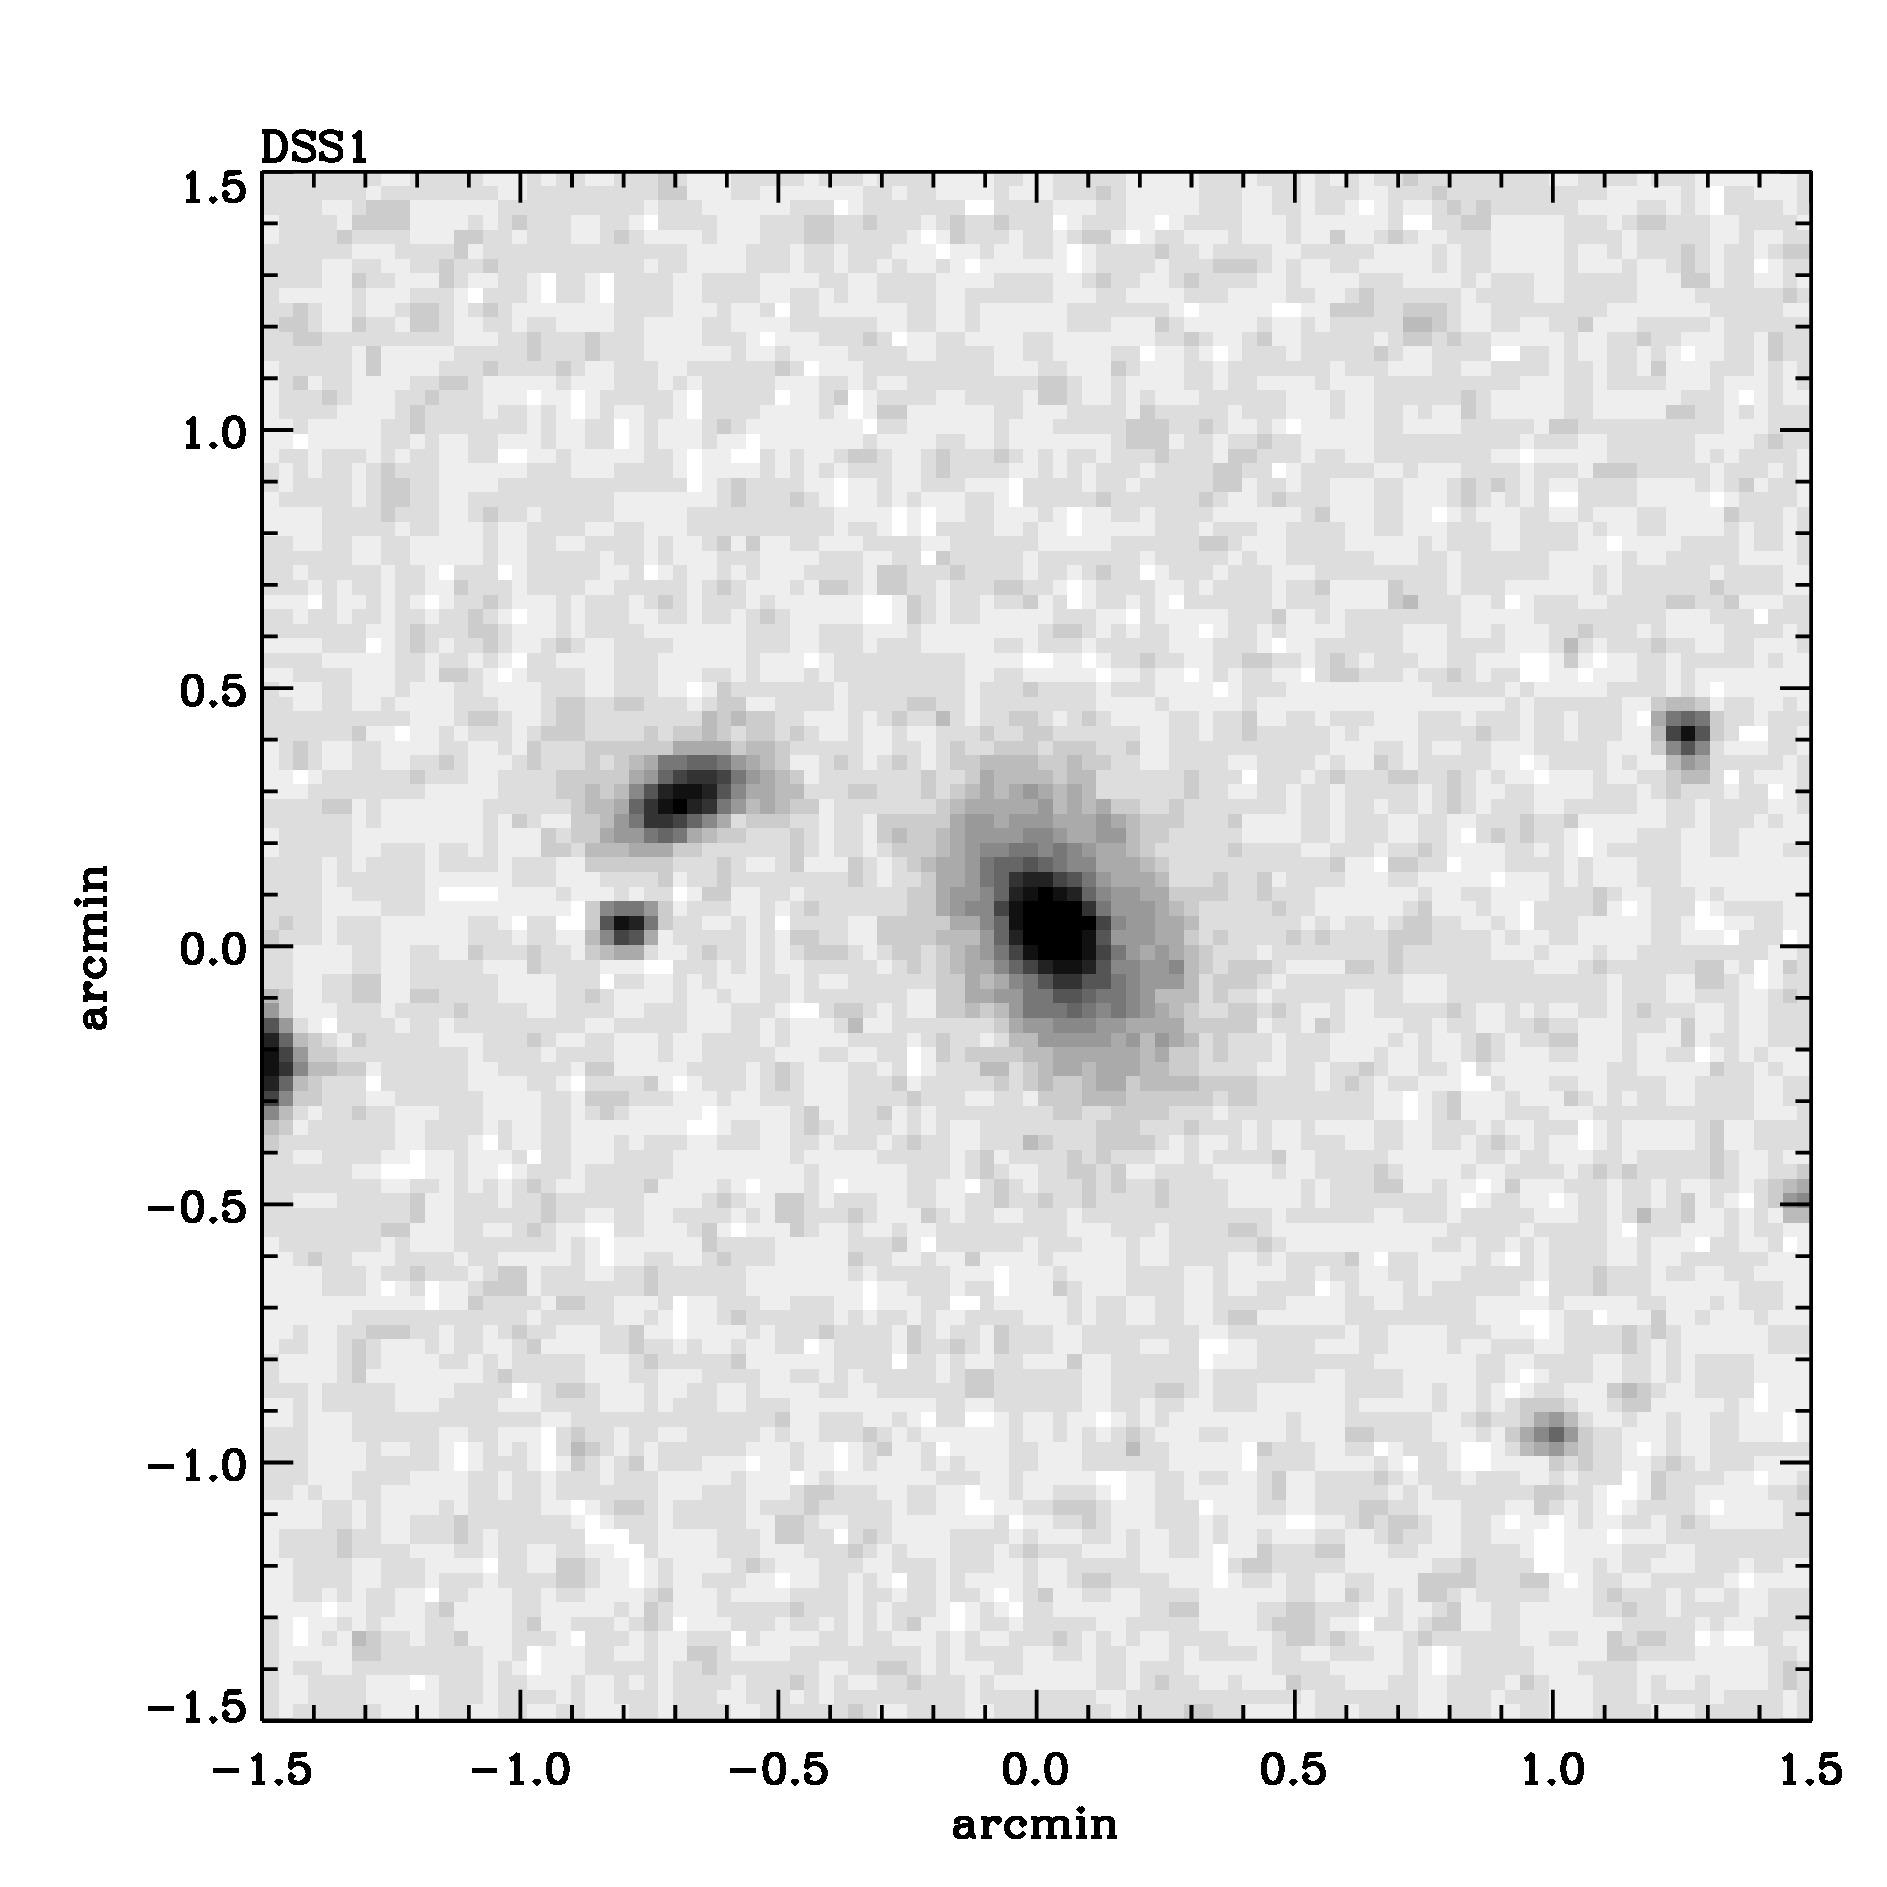 Optical image for SWIFT J1352.8+6917